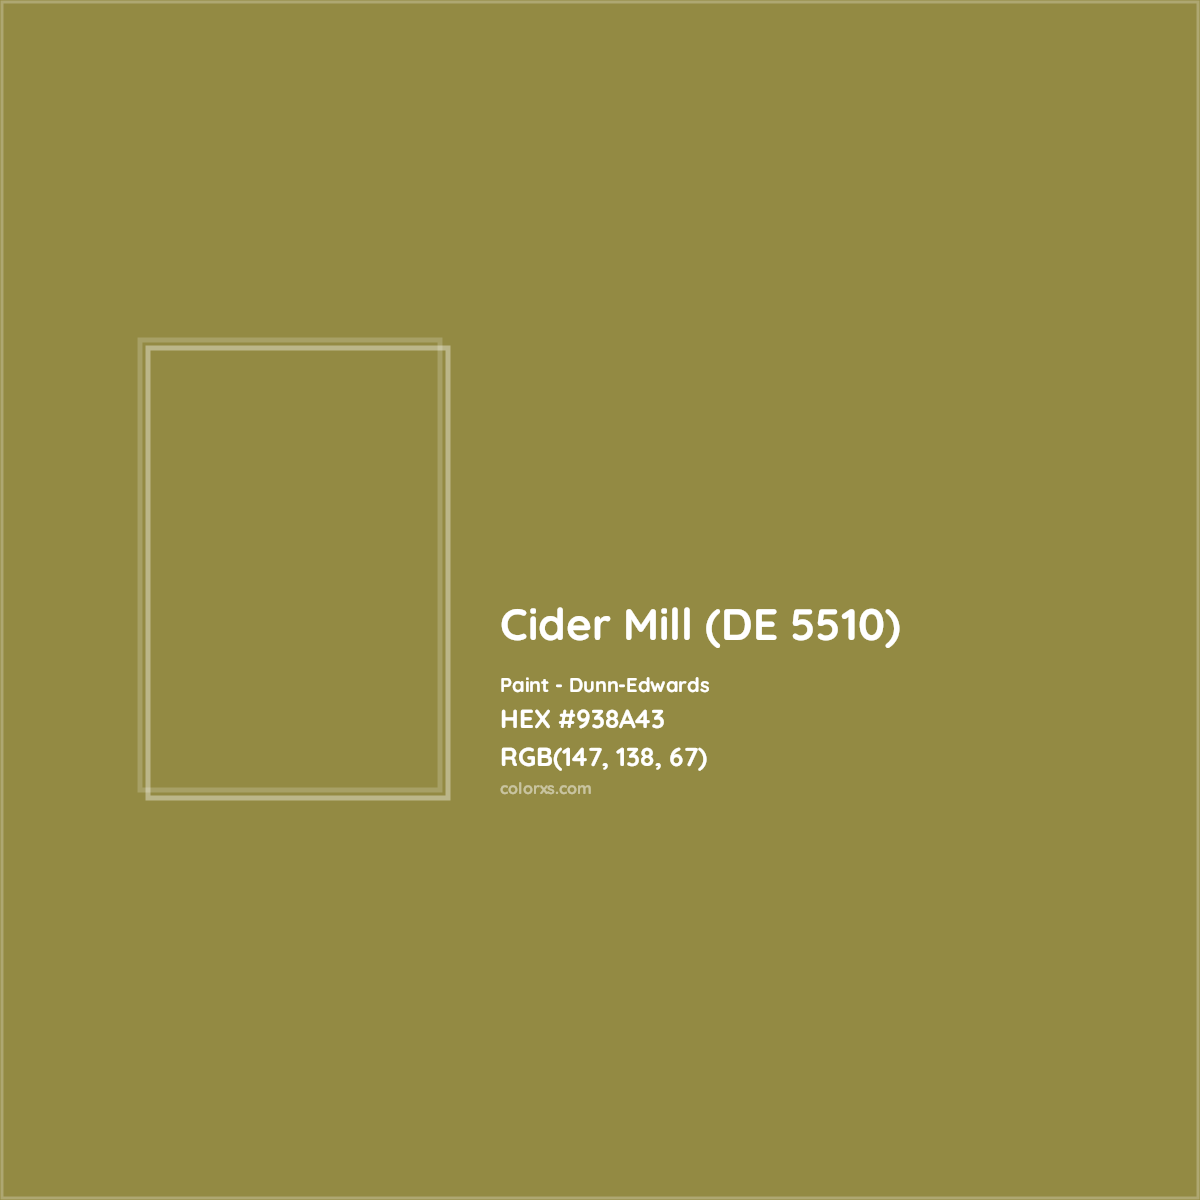 HEX #938A43 Cider Mill (DE 5510) Paint Dunn-Edwards - Color Code